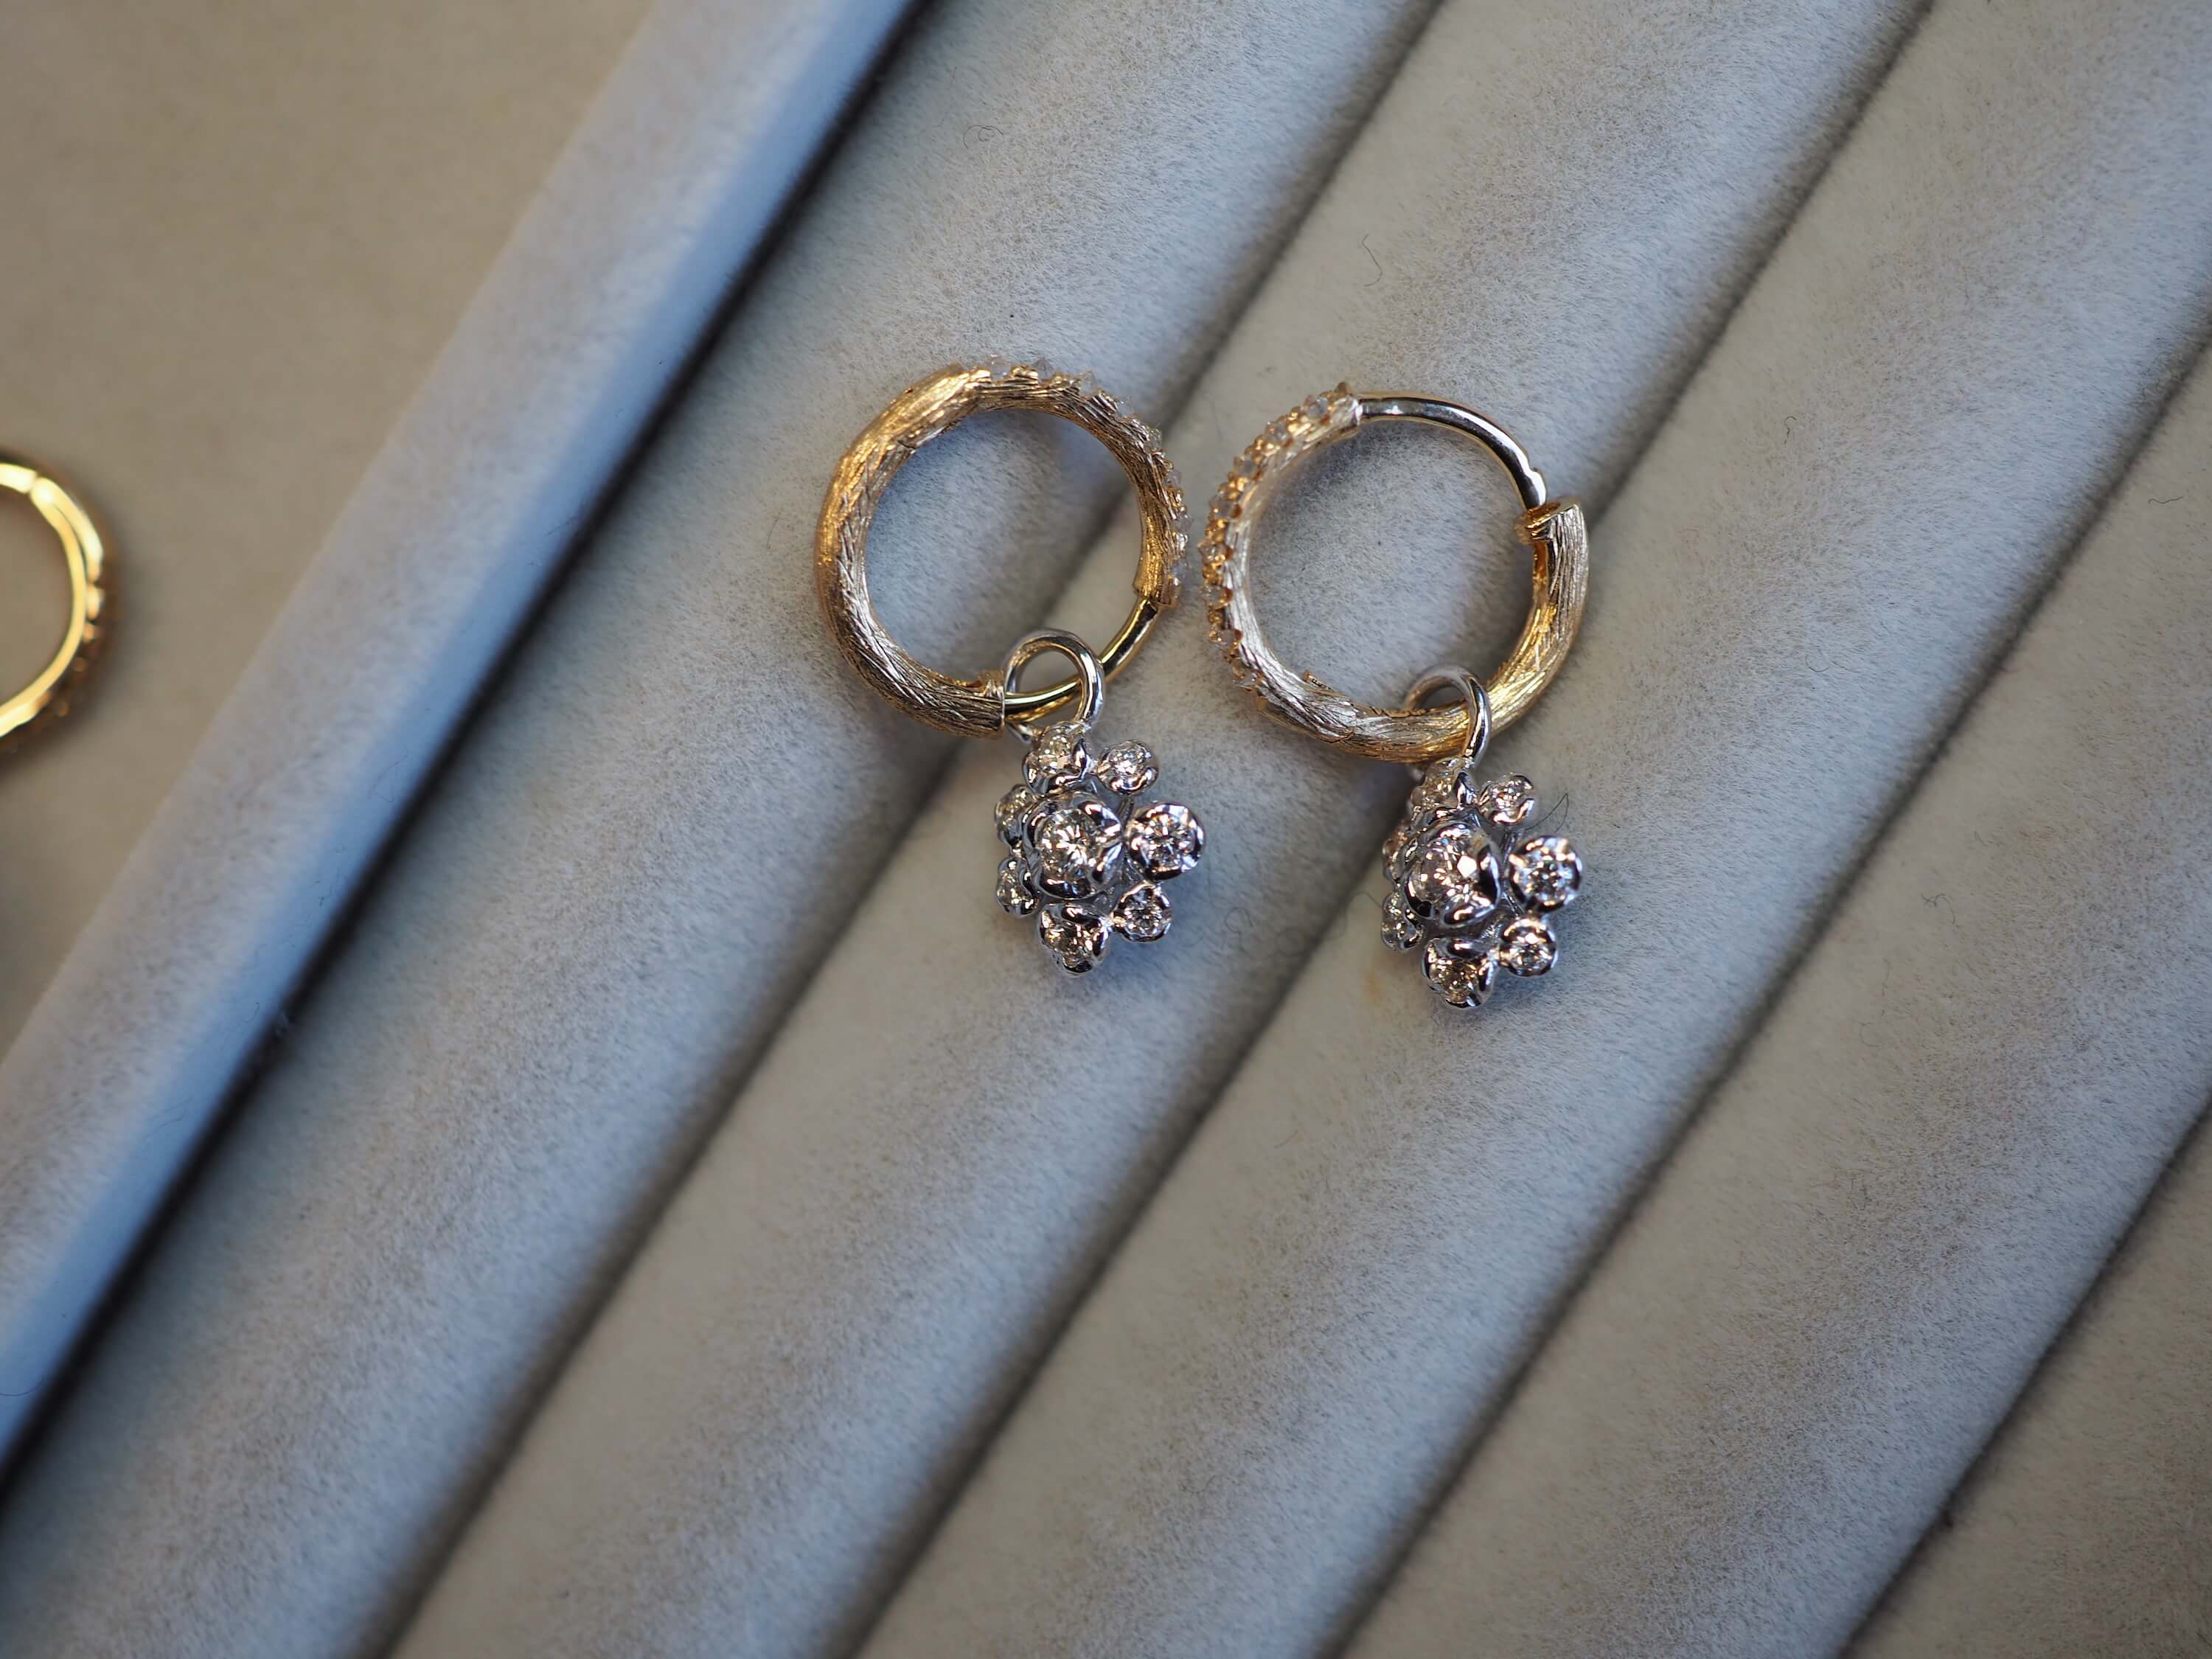 Marguerite Earrings in 18k gold and diamond